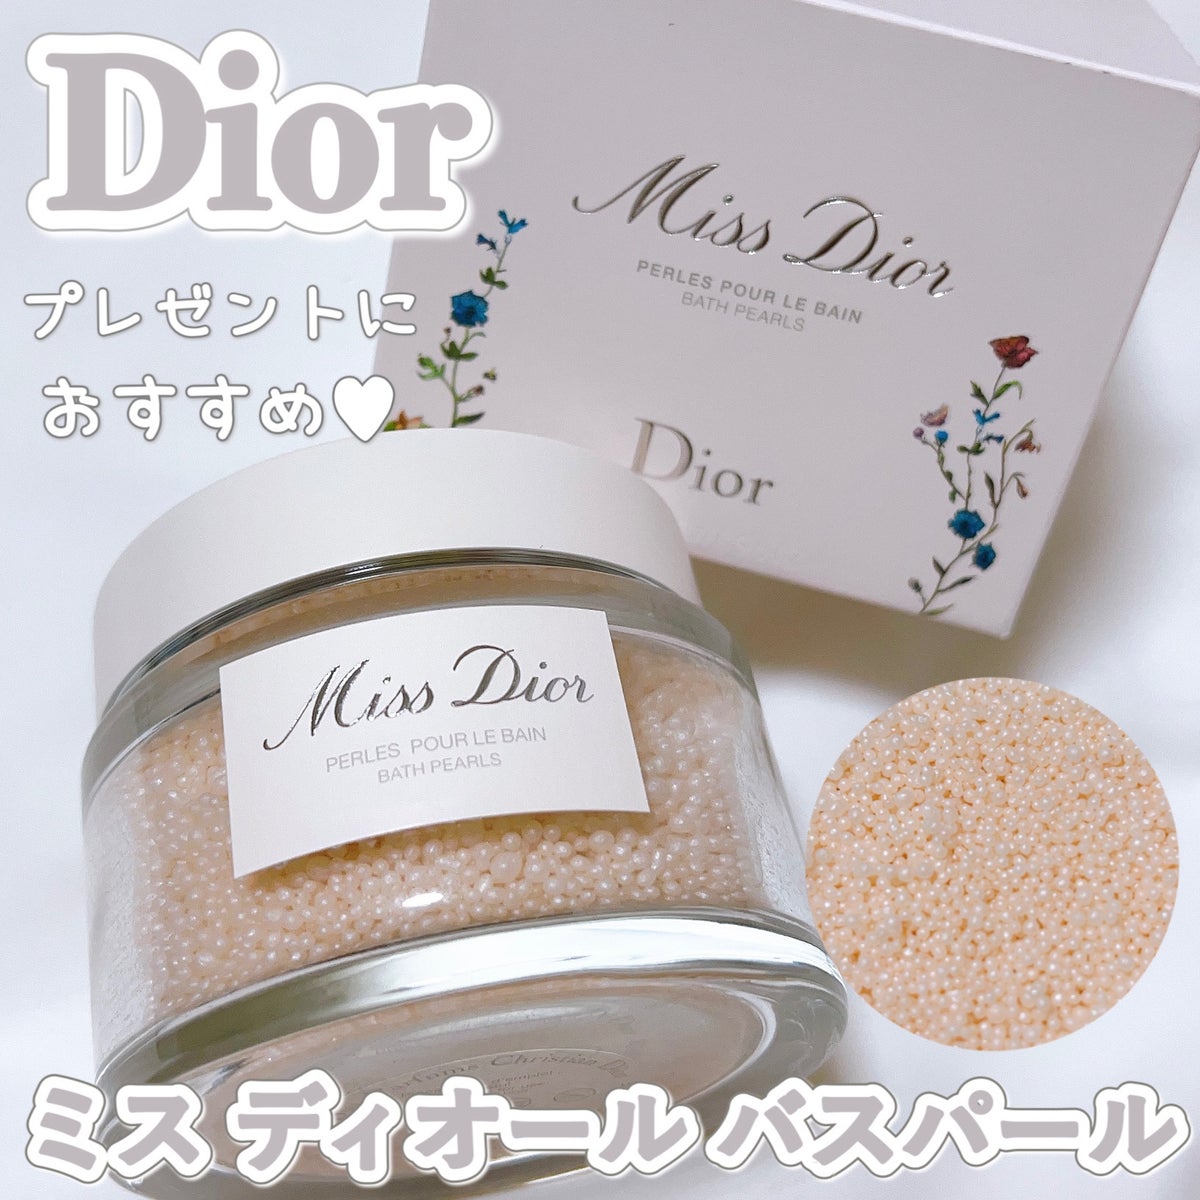 Miss Dior バスパール